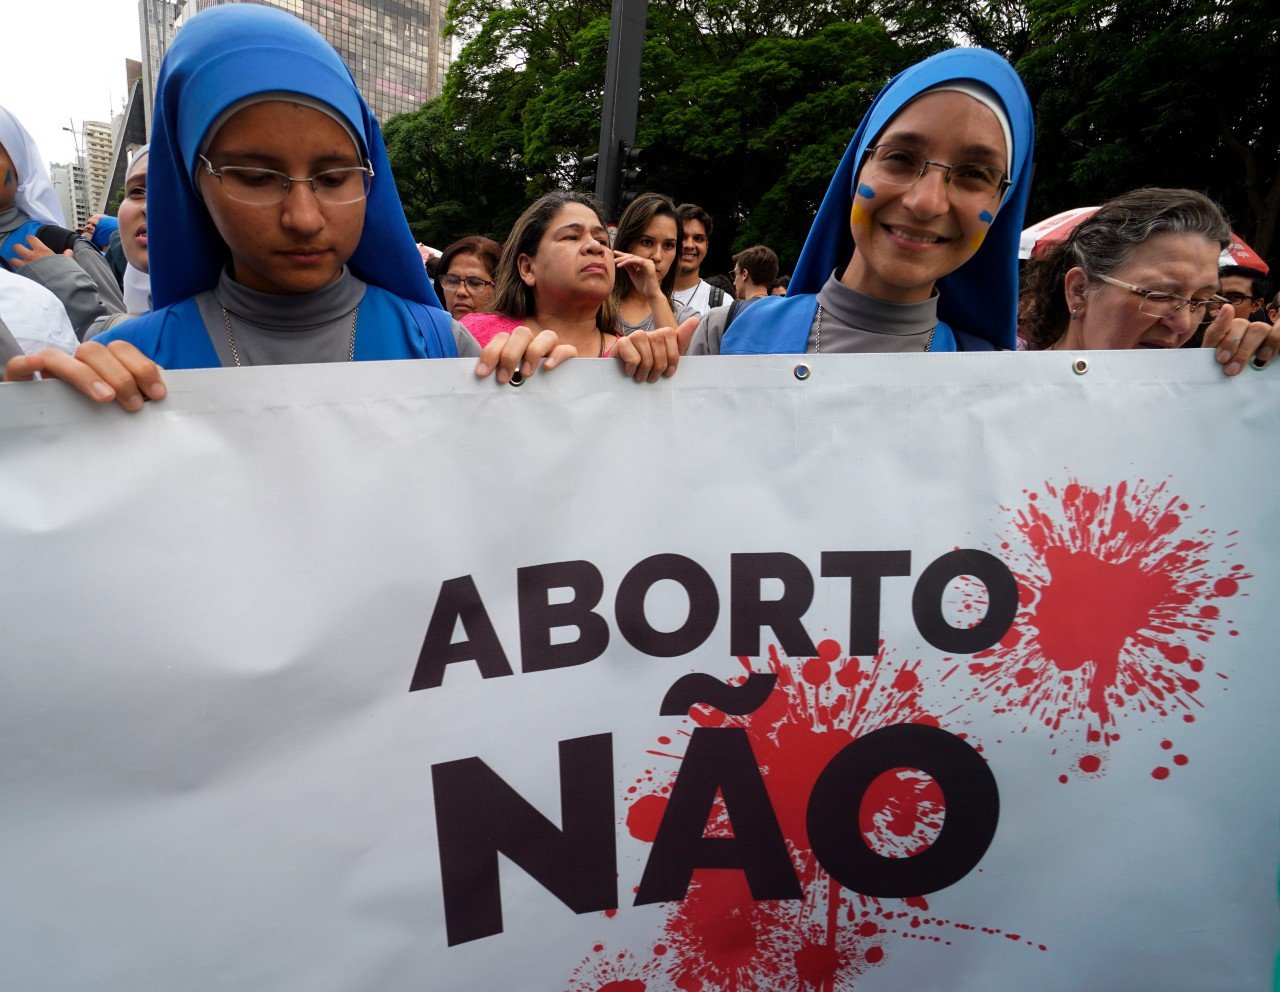 Anti-abortion protest i in São Paulo, Brazil, on 3 December 2018.